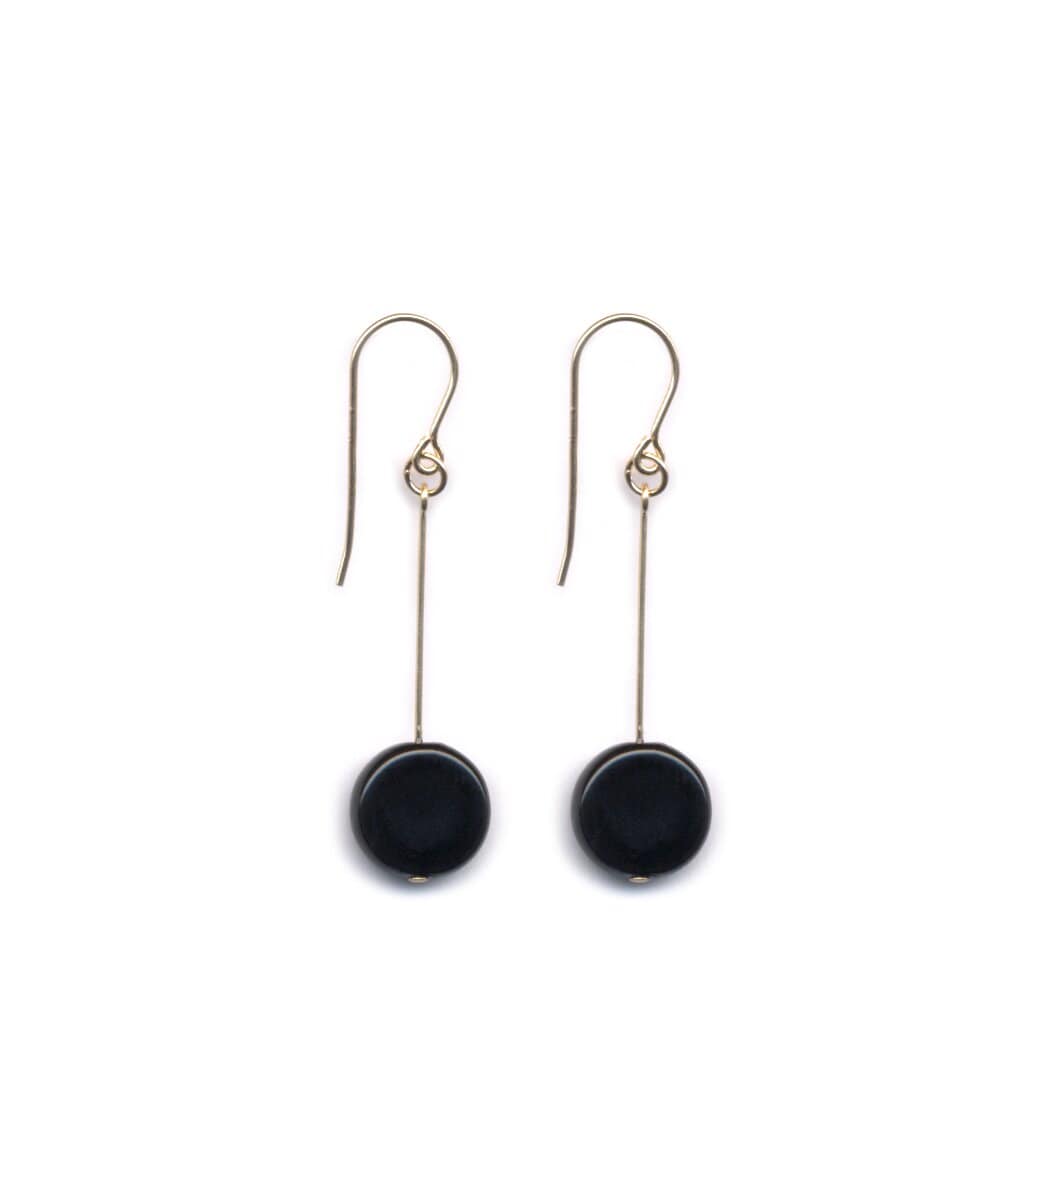 Irk Jewelry I. Ronni Kappos E1122 Black Circle Drop Earrings